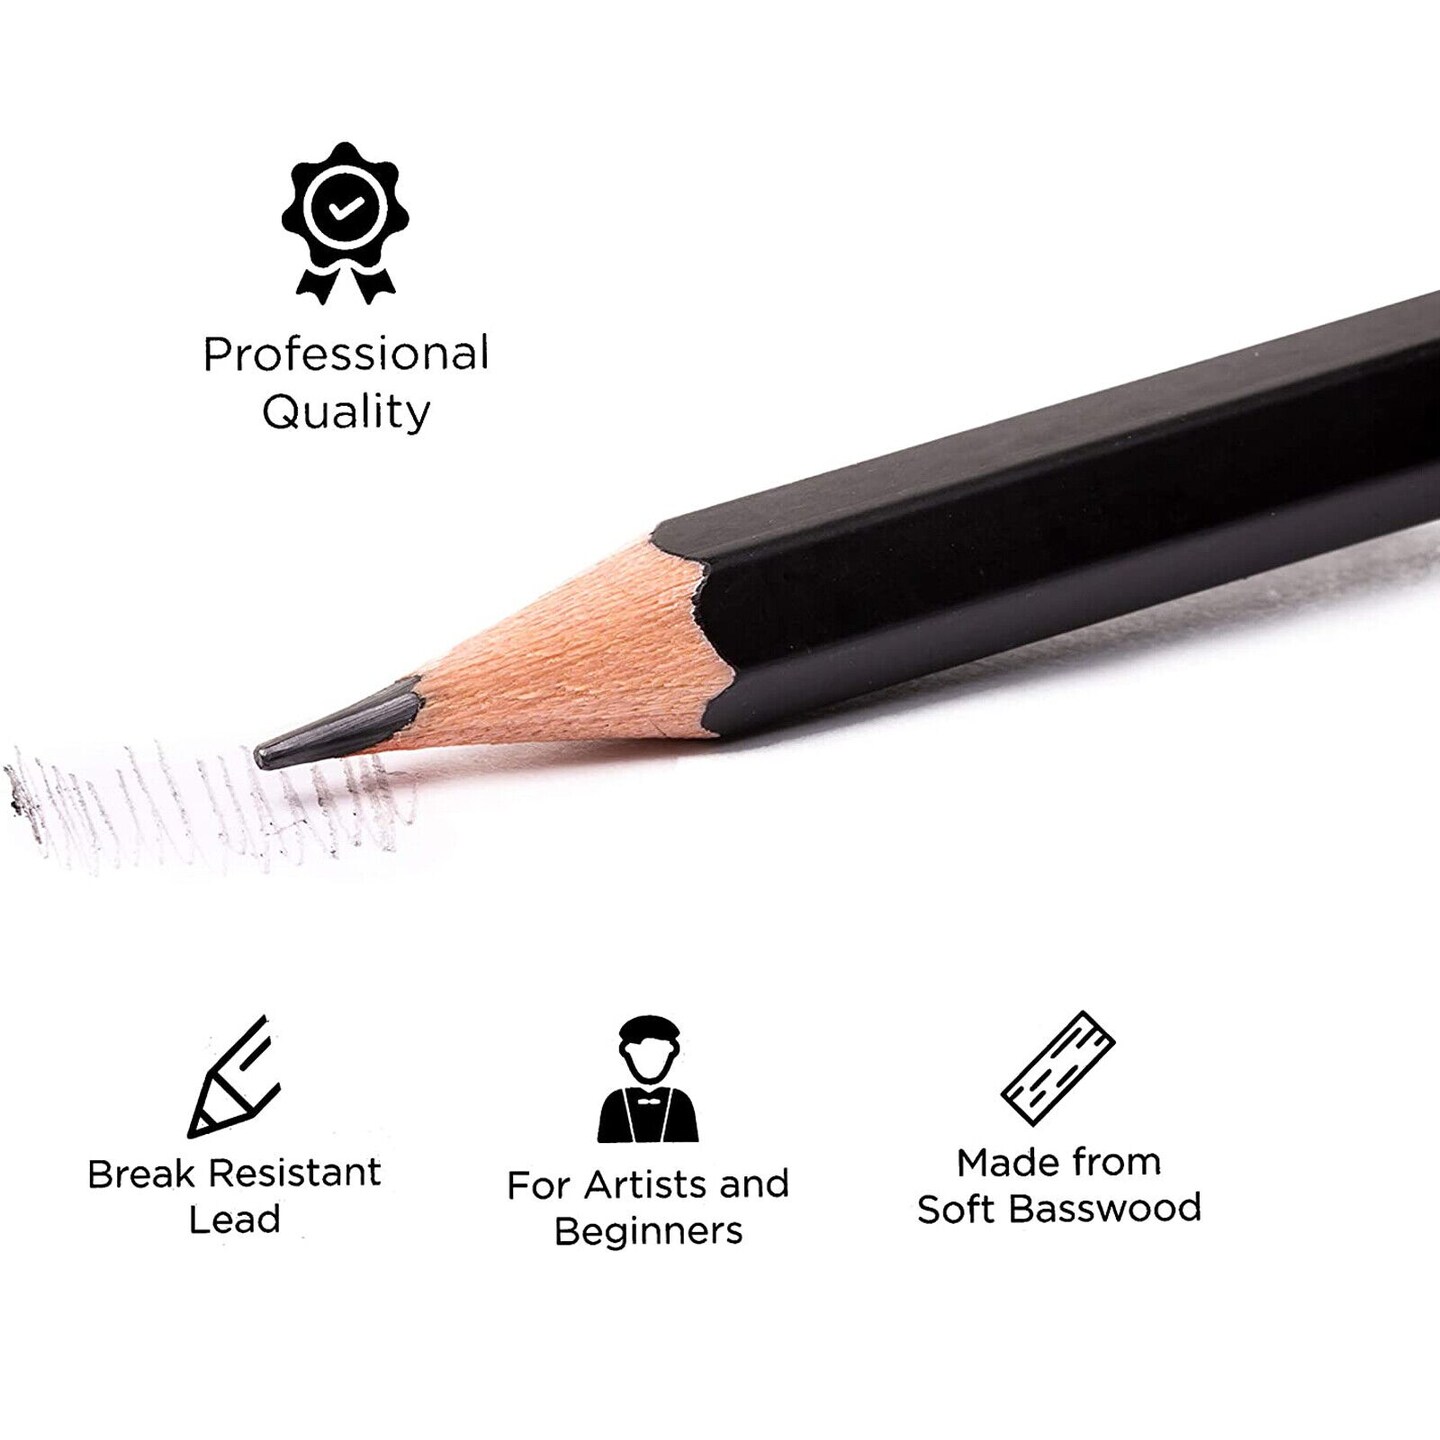 22Pcs Sketching Pencils Artist Graphite Pencil Tool Kit for Kids